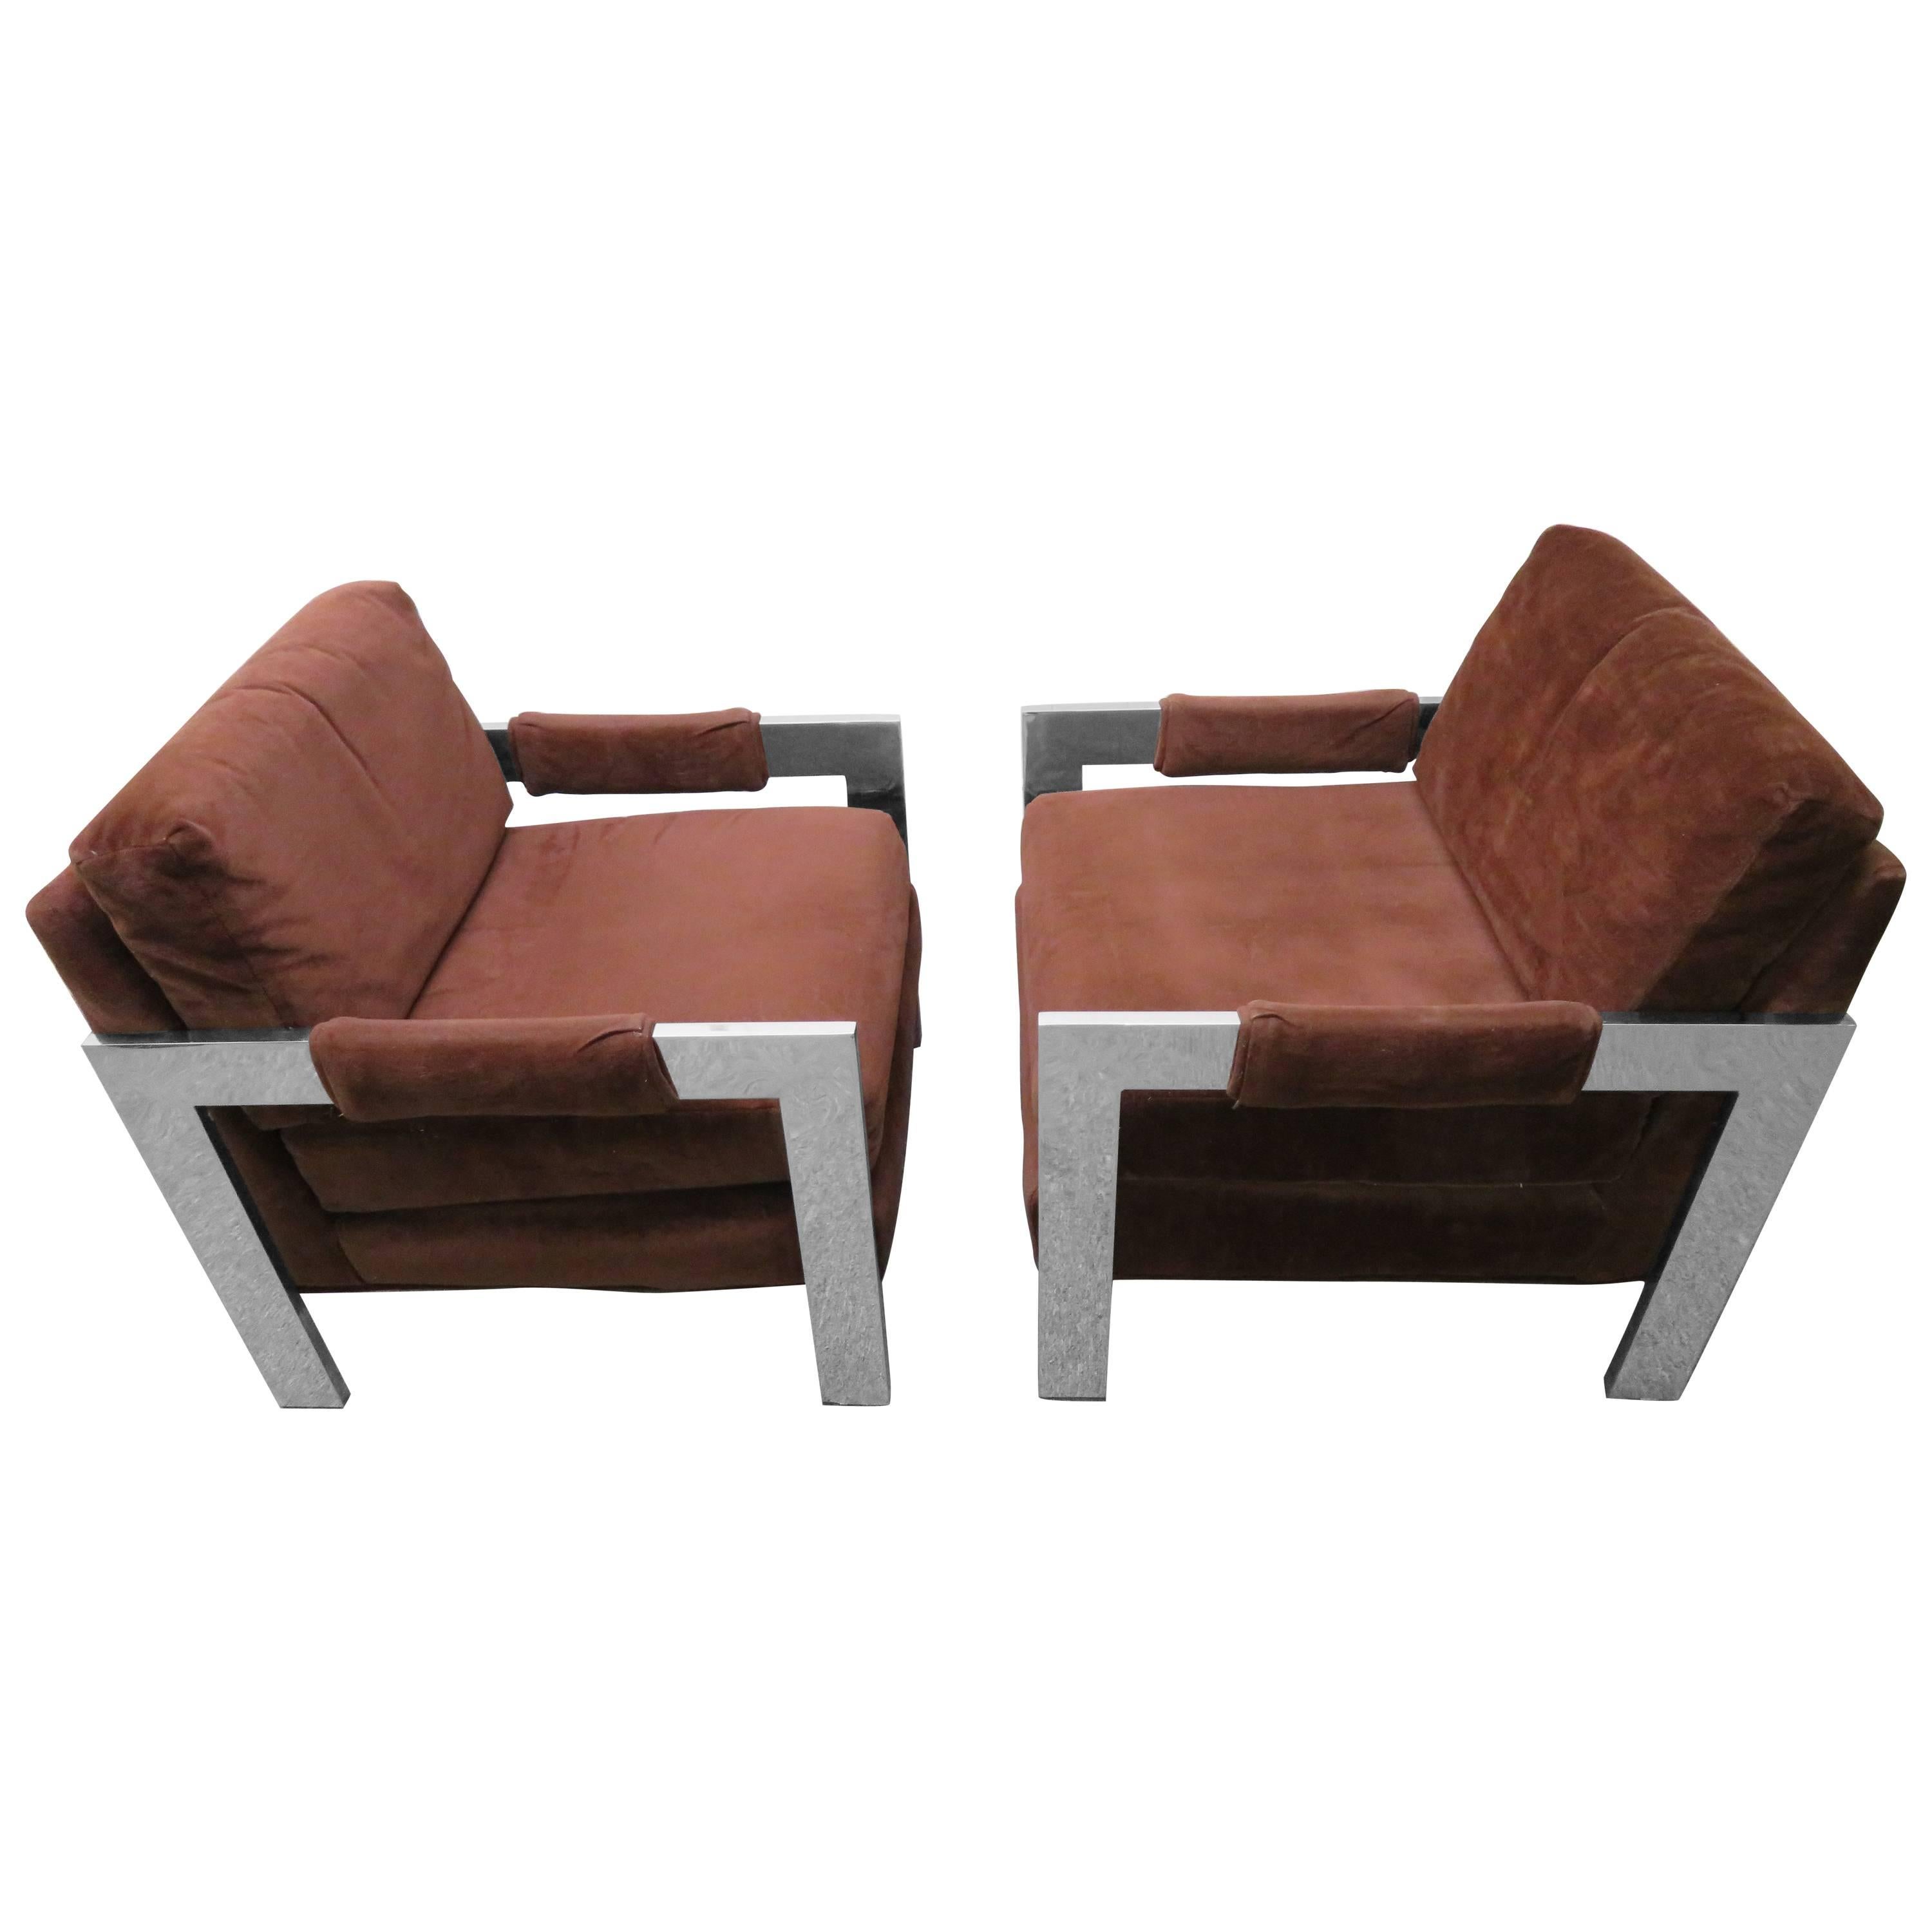 Chunky Chrome Pair Milo Baughman StyleLounge Chairs, Mid-Century Modern